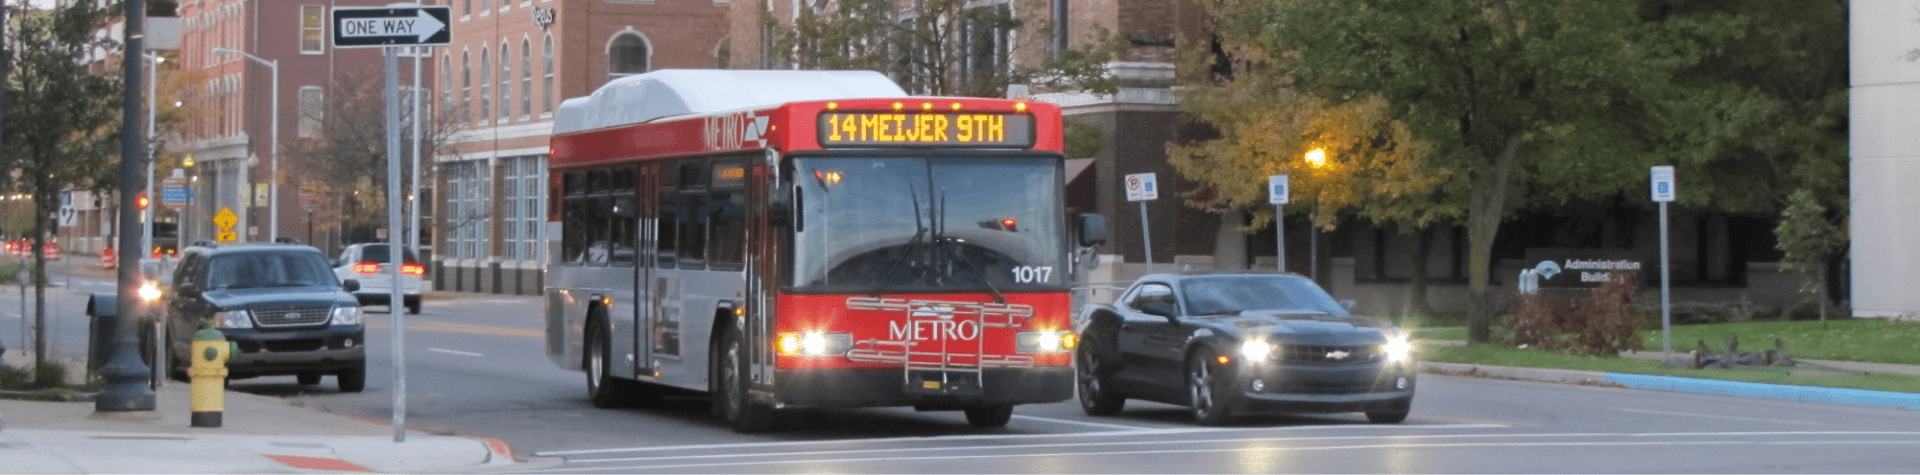 An image of a Kalamazoo Metro bus next to a car at an intersection.